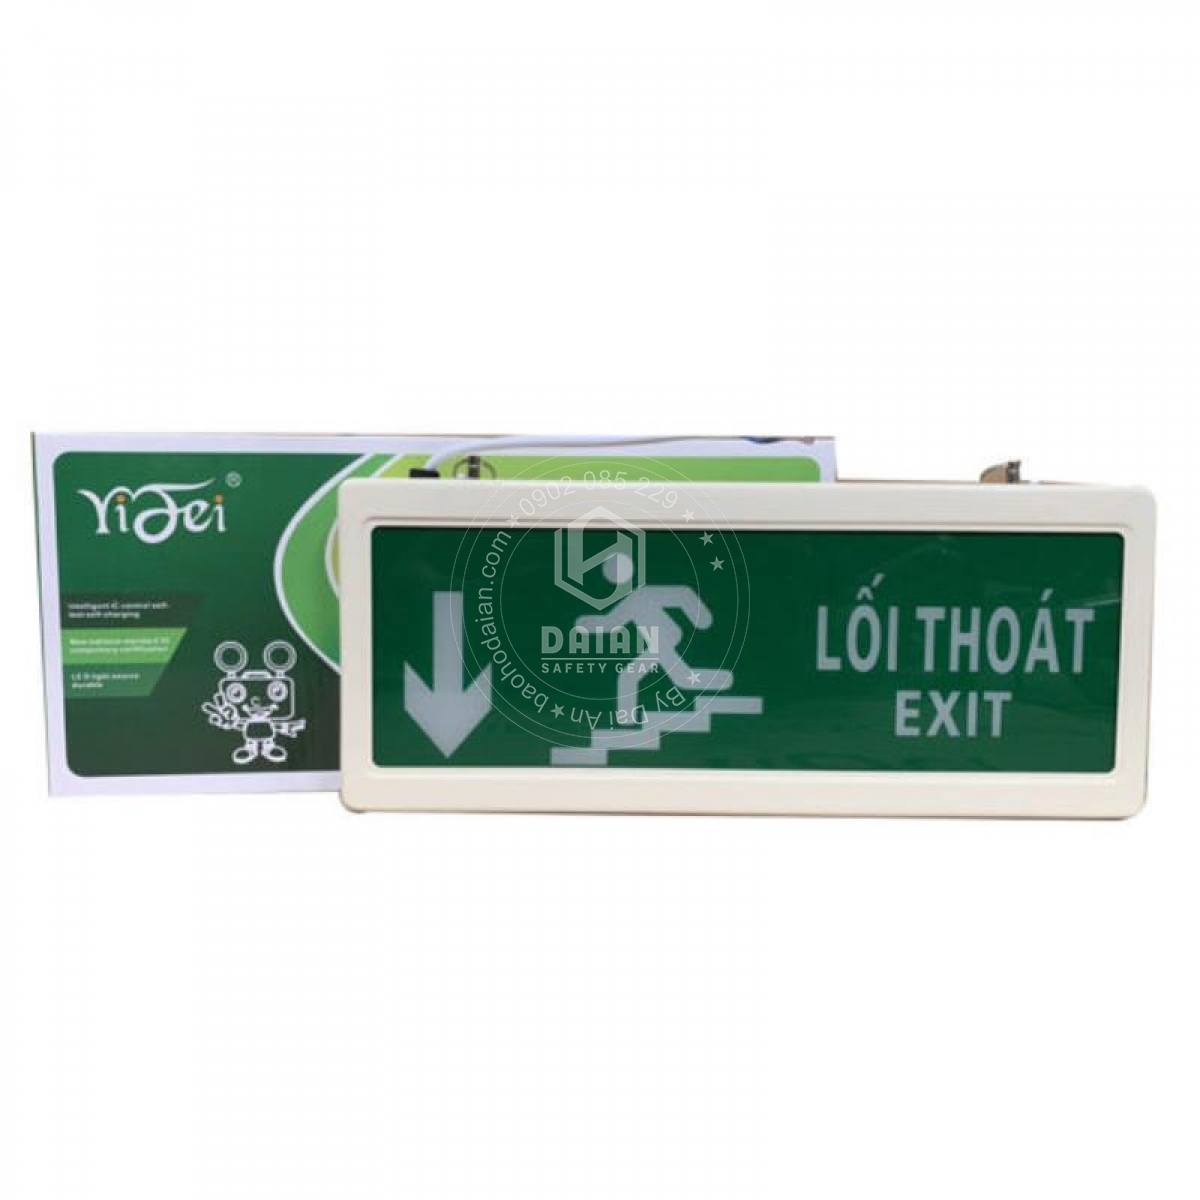 den-exit-thoat-hiem-yf208-chi-xuong